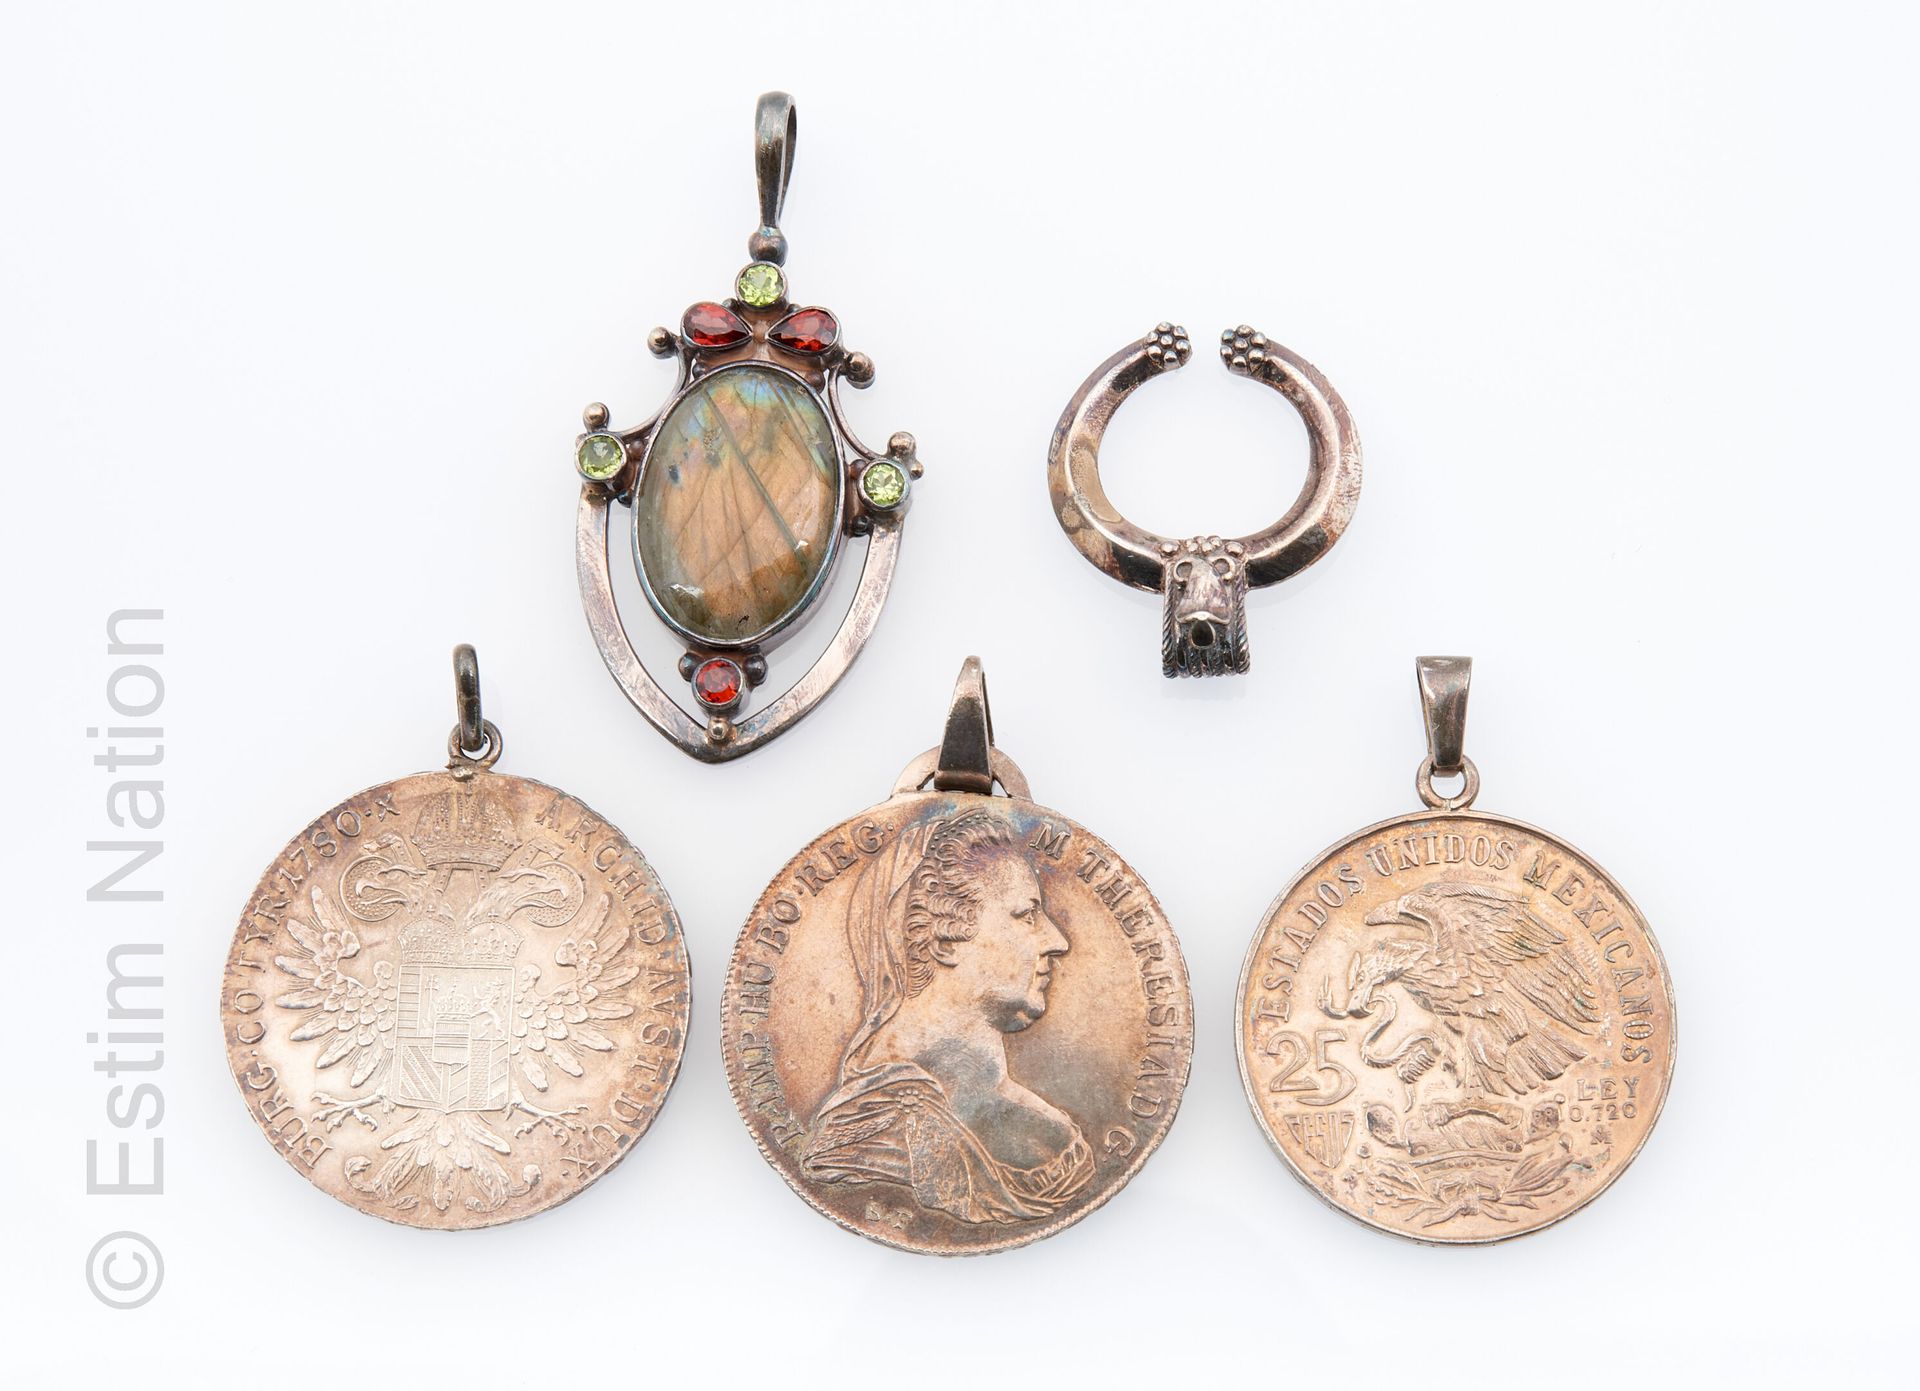 LOT DE BIJOUX EN ARGENT 一批银质珠宝（925千分之一），包括三个装饰有硬币的吊坠，一个希腊罗马风格的吊坠，以及一个以凸圆形切割的拉布拉多&hellip;